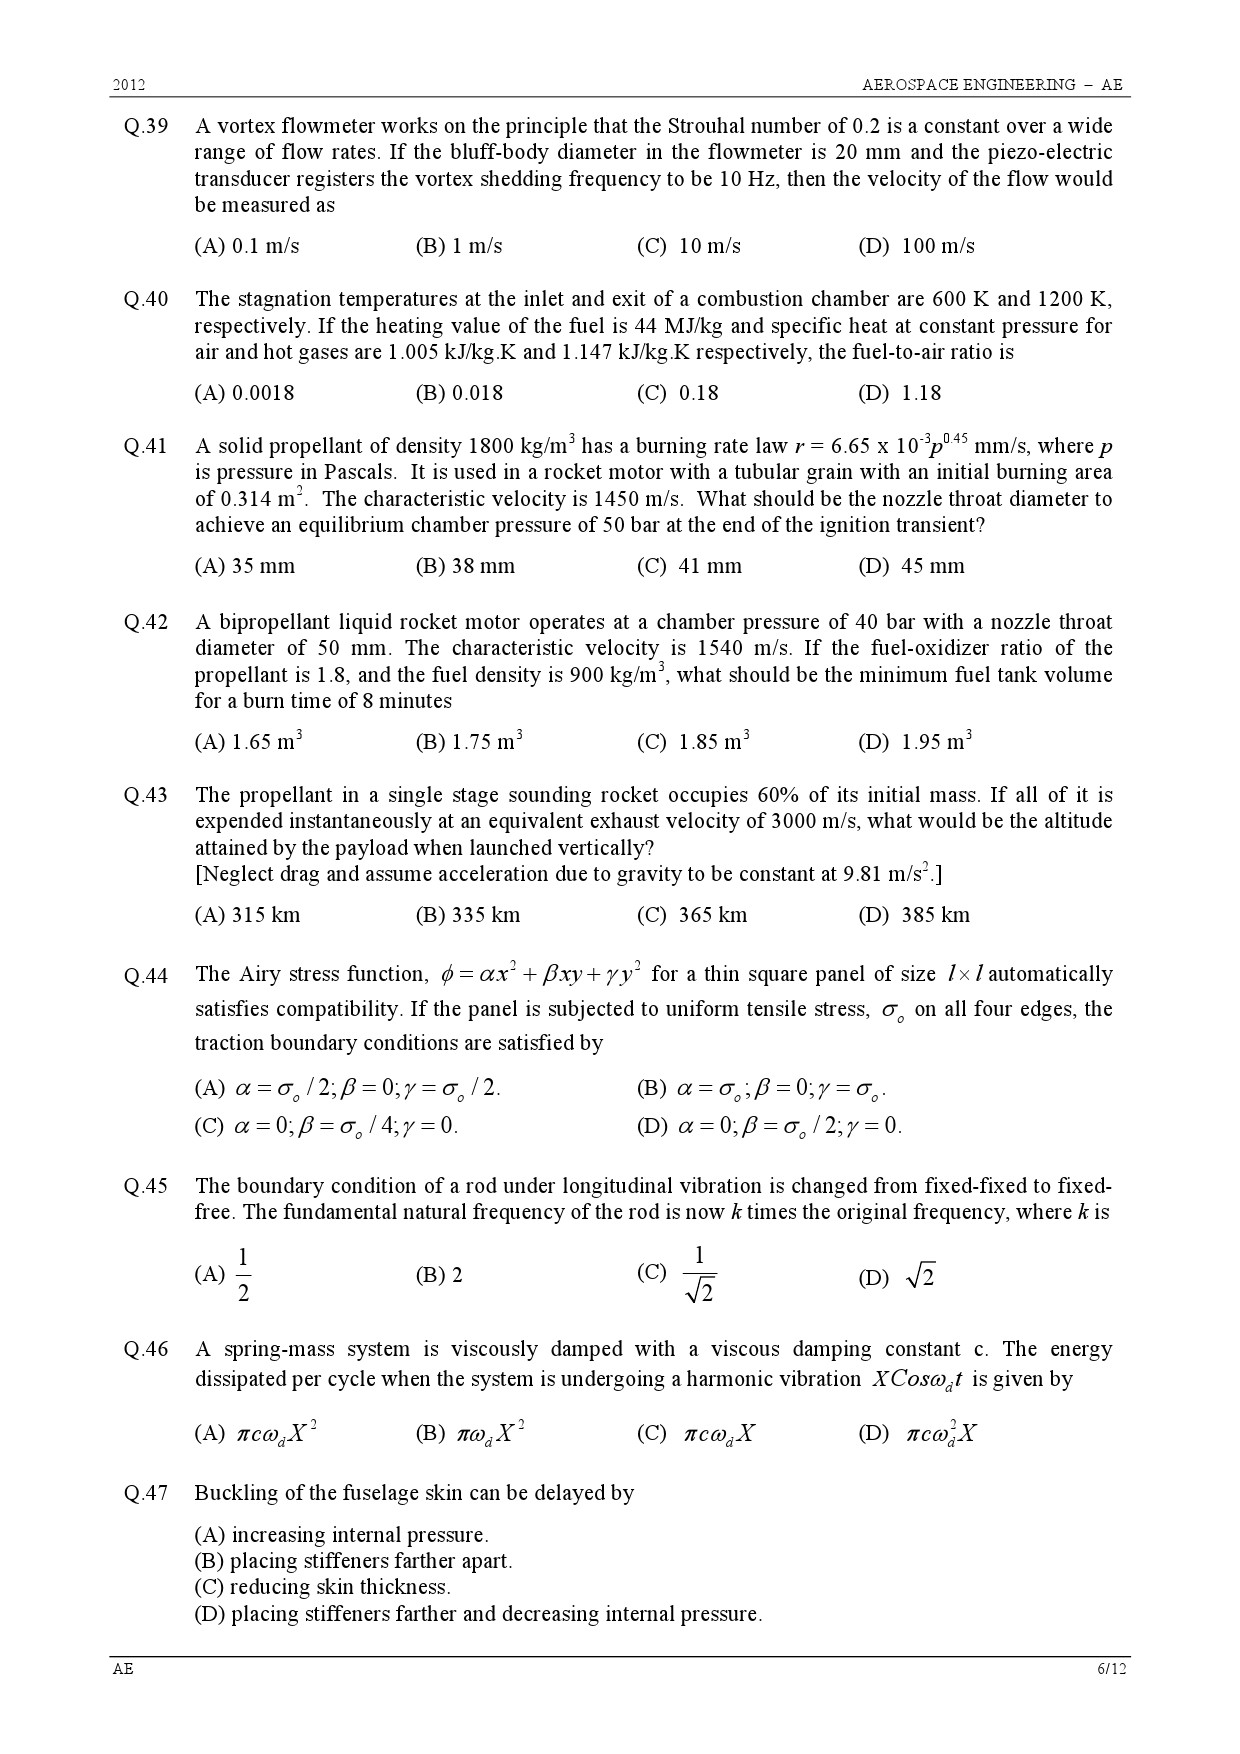 GATE Exam 2012 Aerospace Engineering Question Paper 6